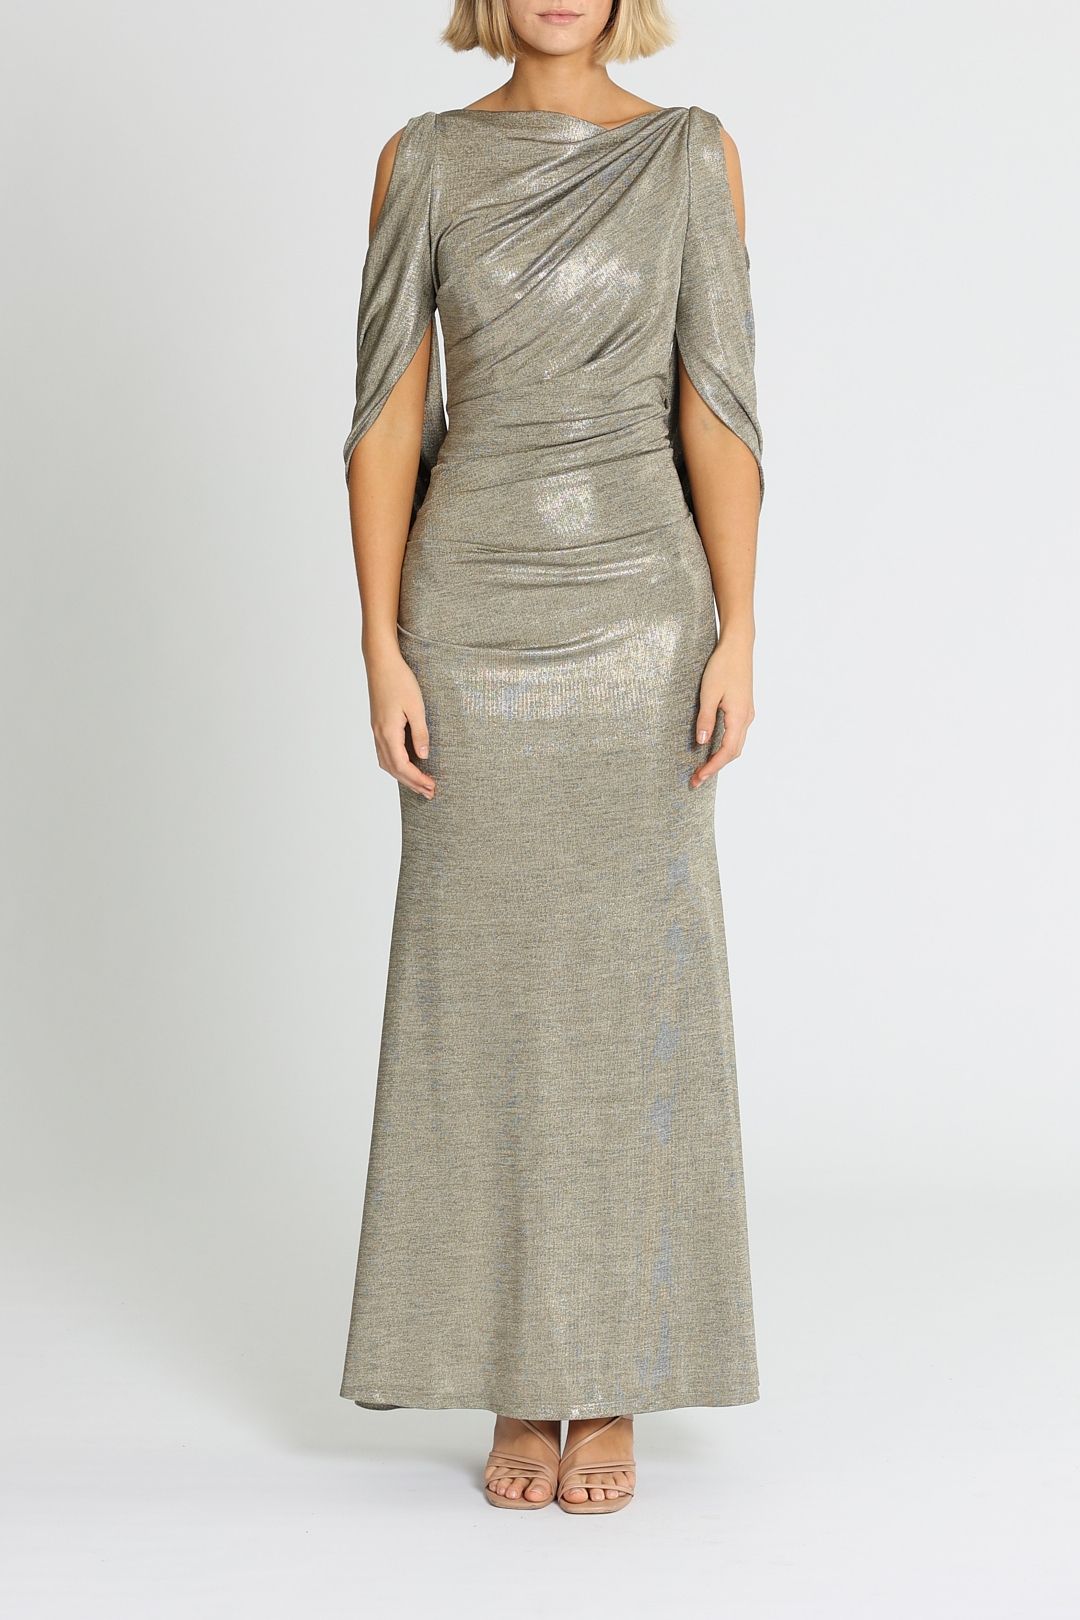 Montique  Lana Metallic Gown